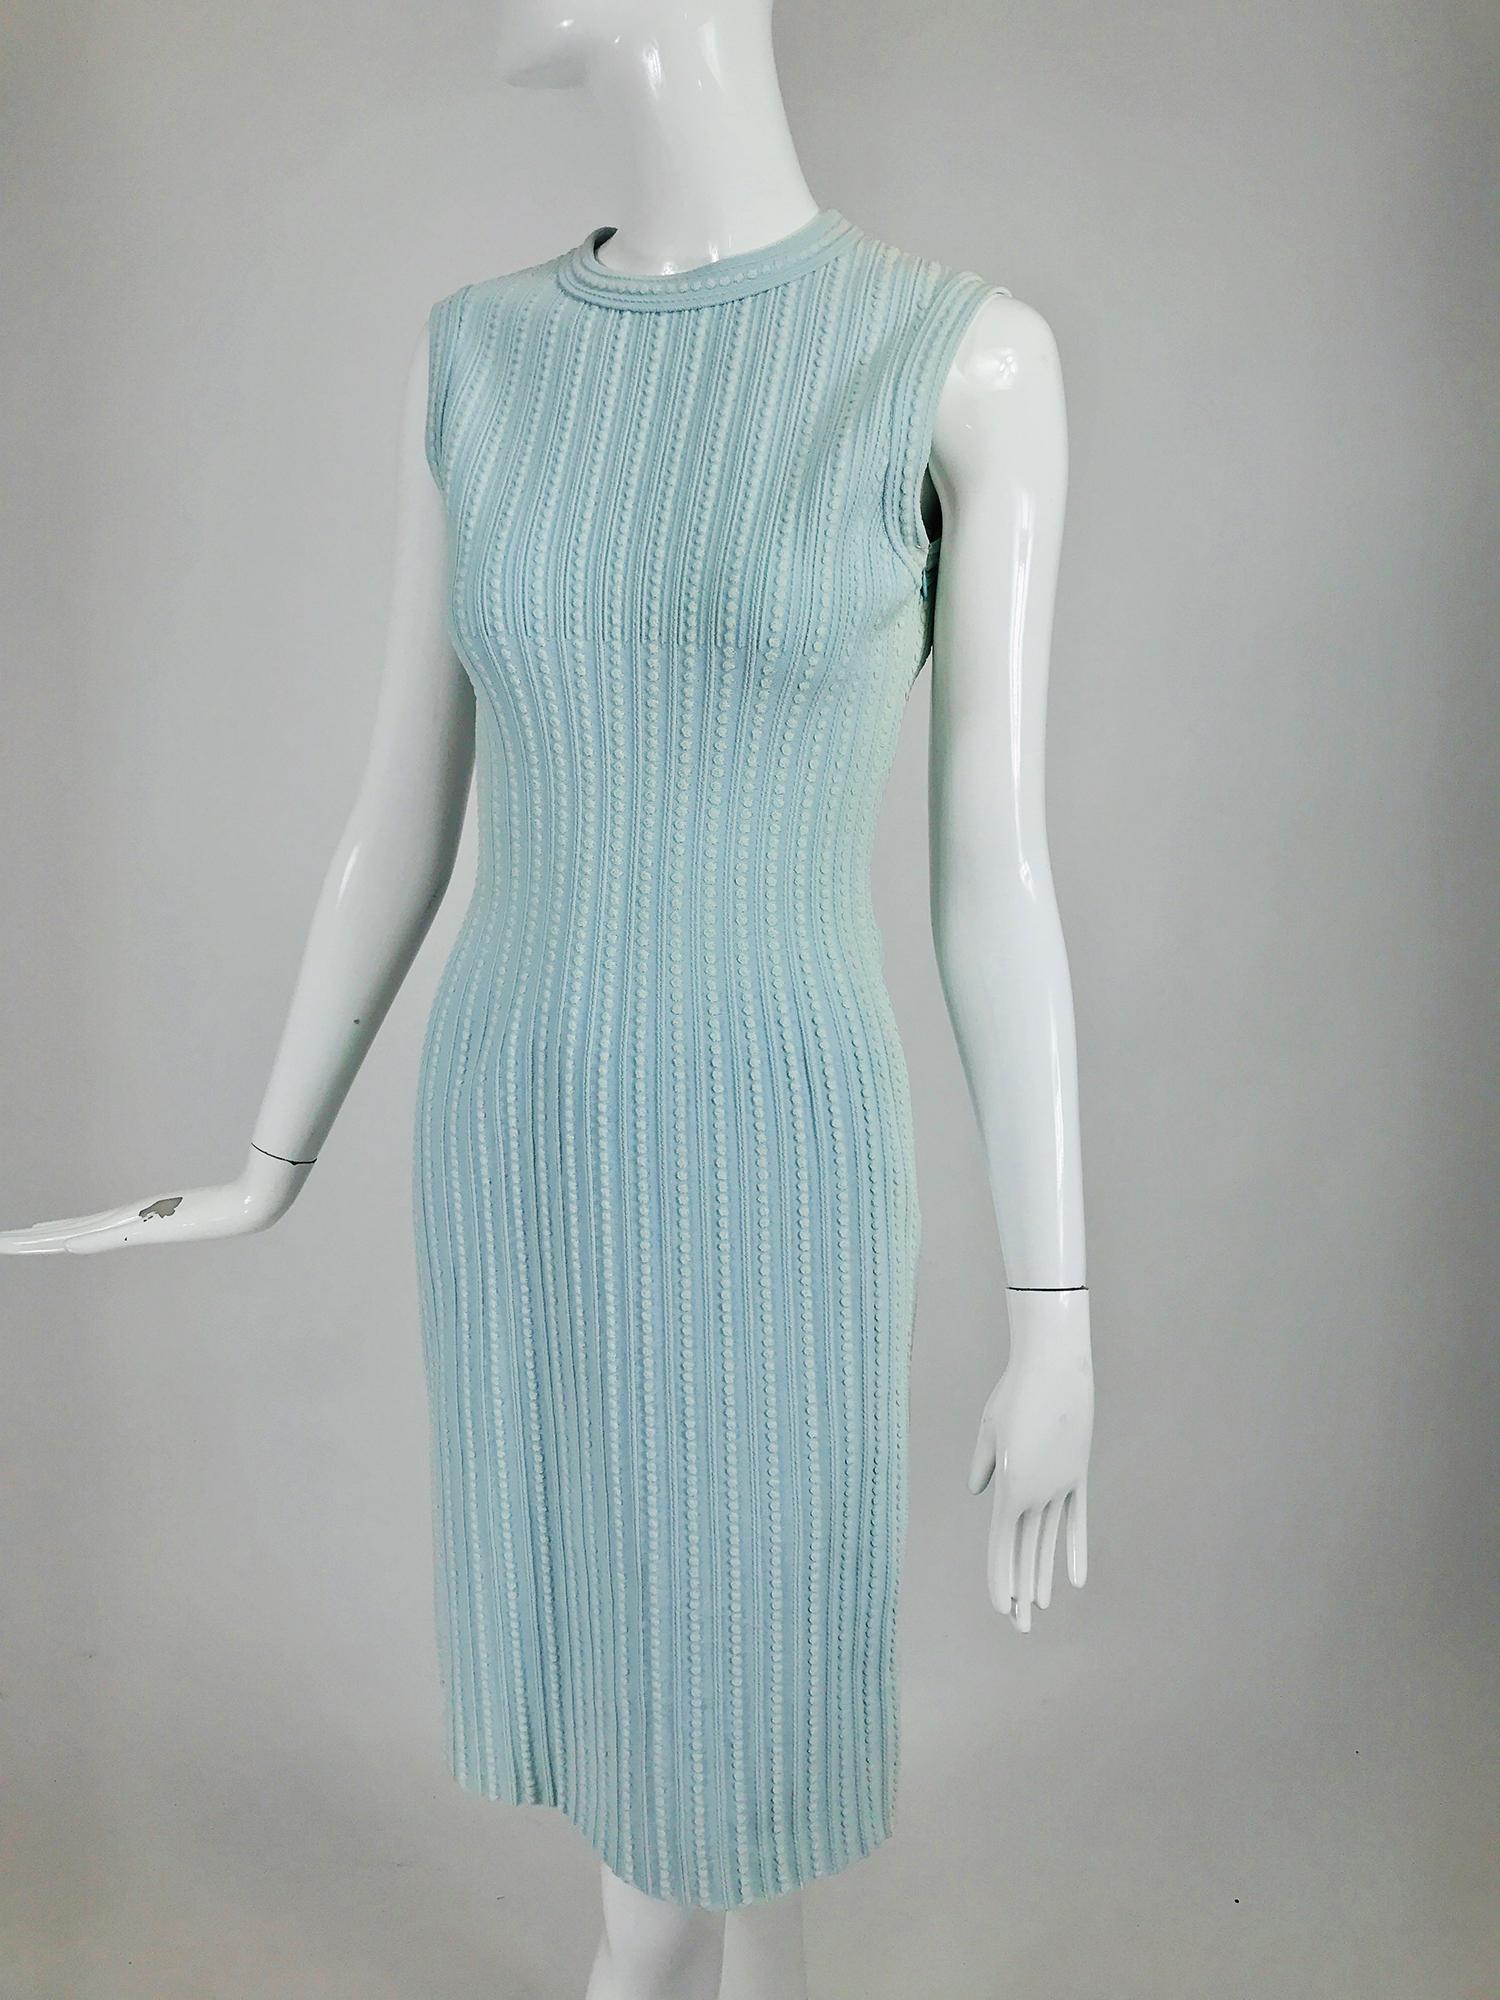  Azzedine Alaïa Blue and Cream Fitted Body Con Dress 4